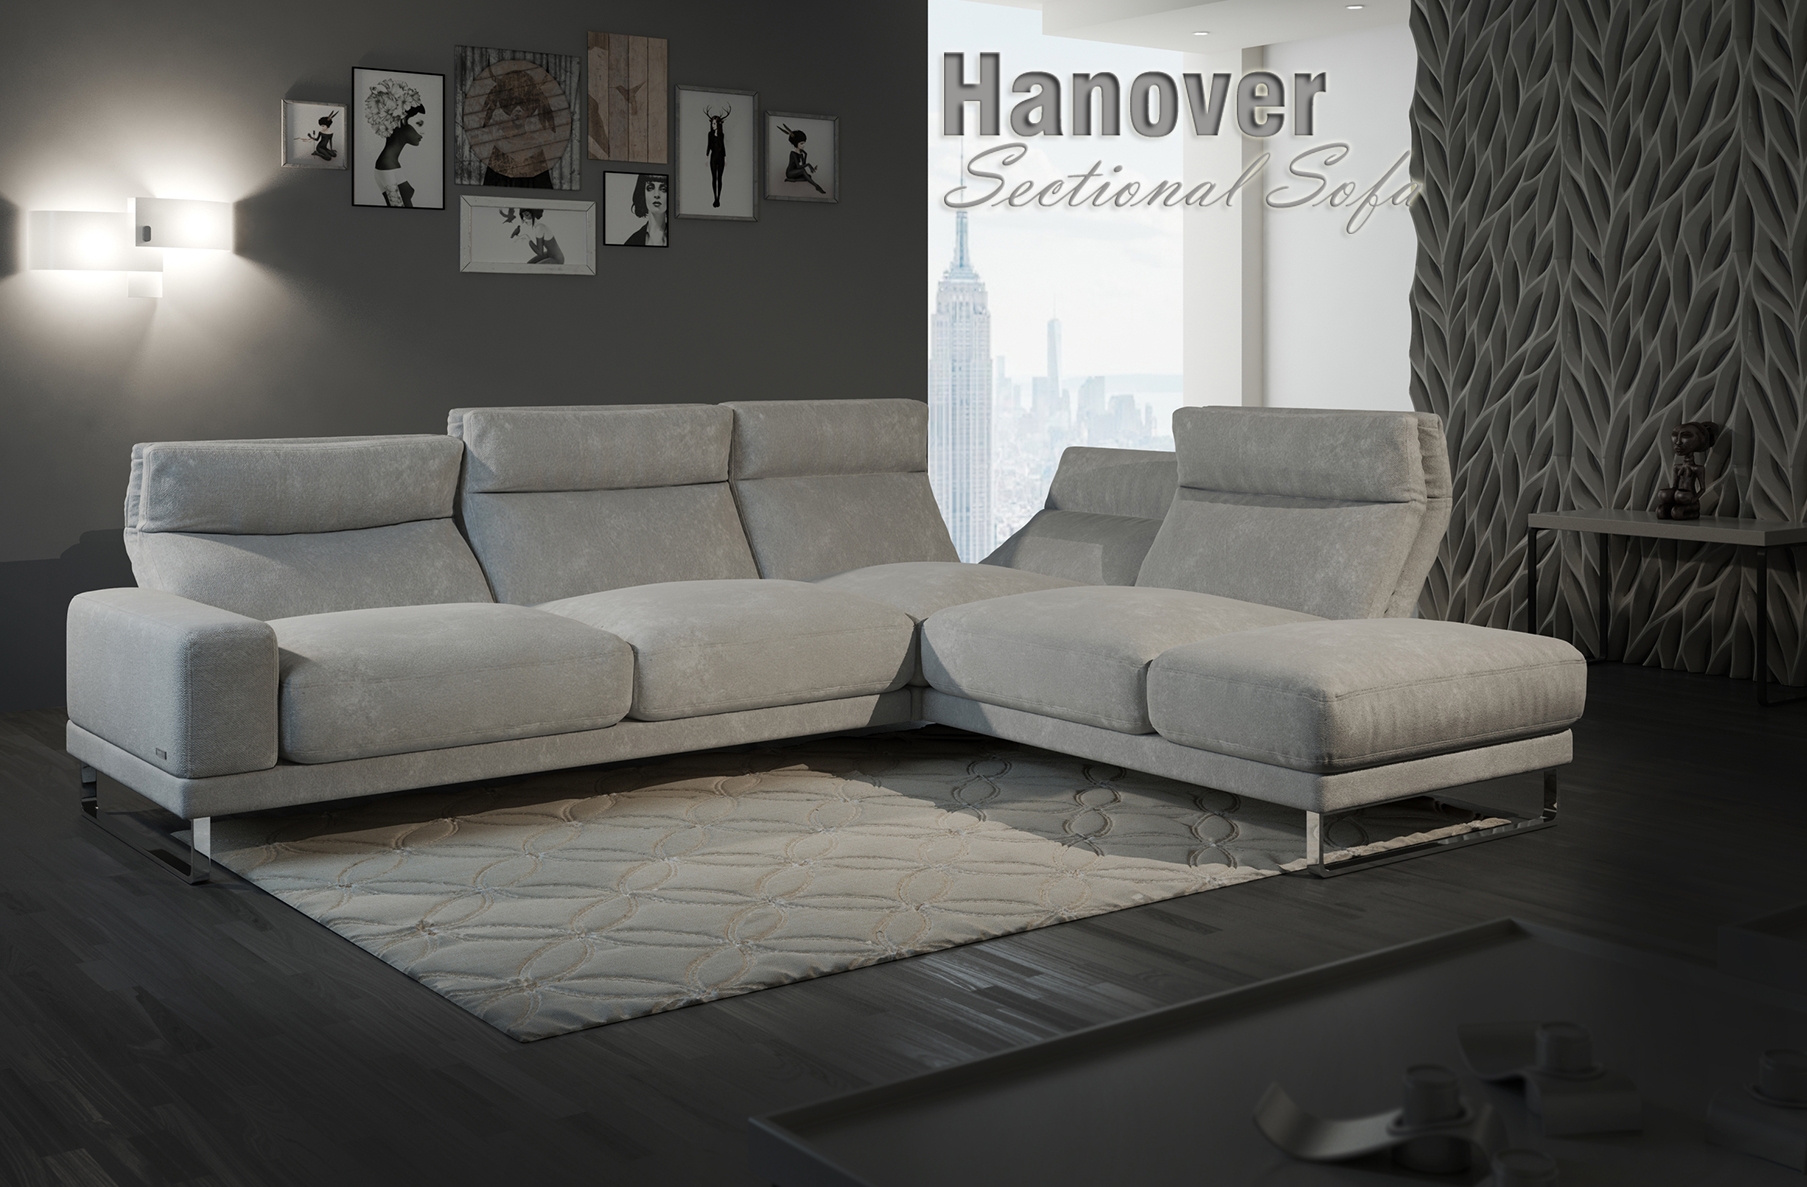 Hanover Sectional sofa, Cheap